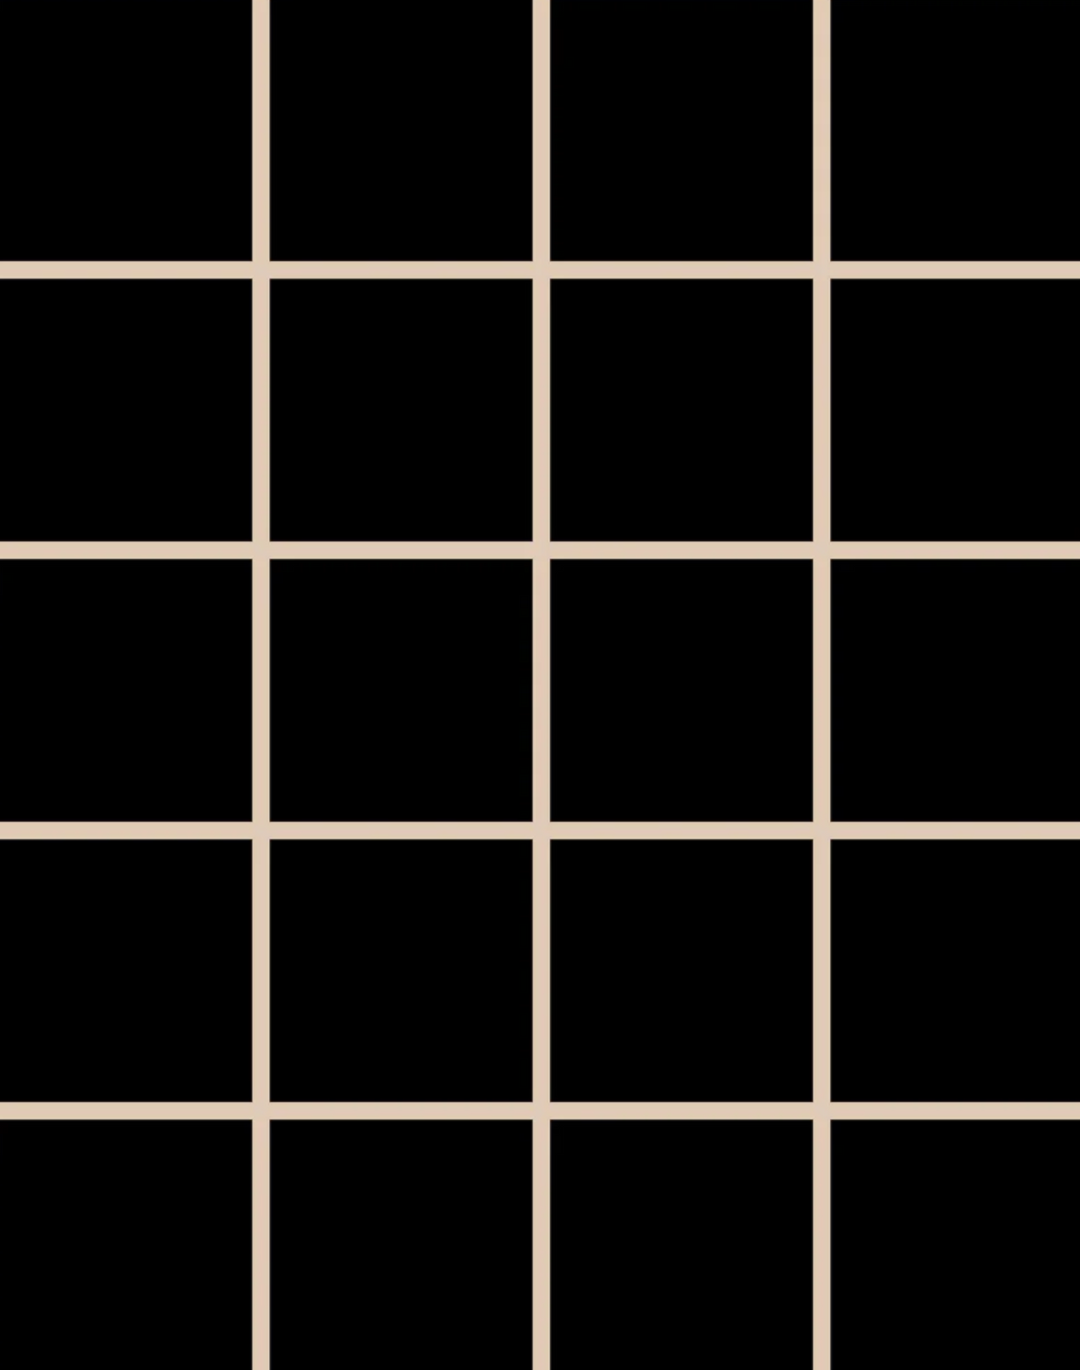 Grid - Small Thin, Line: Tan | Background: Black